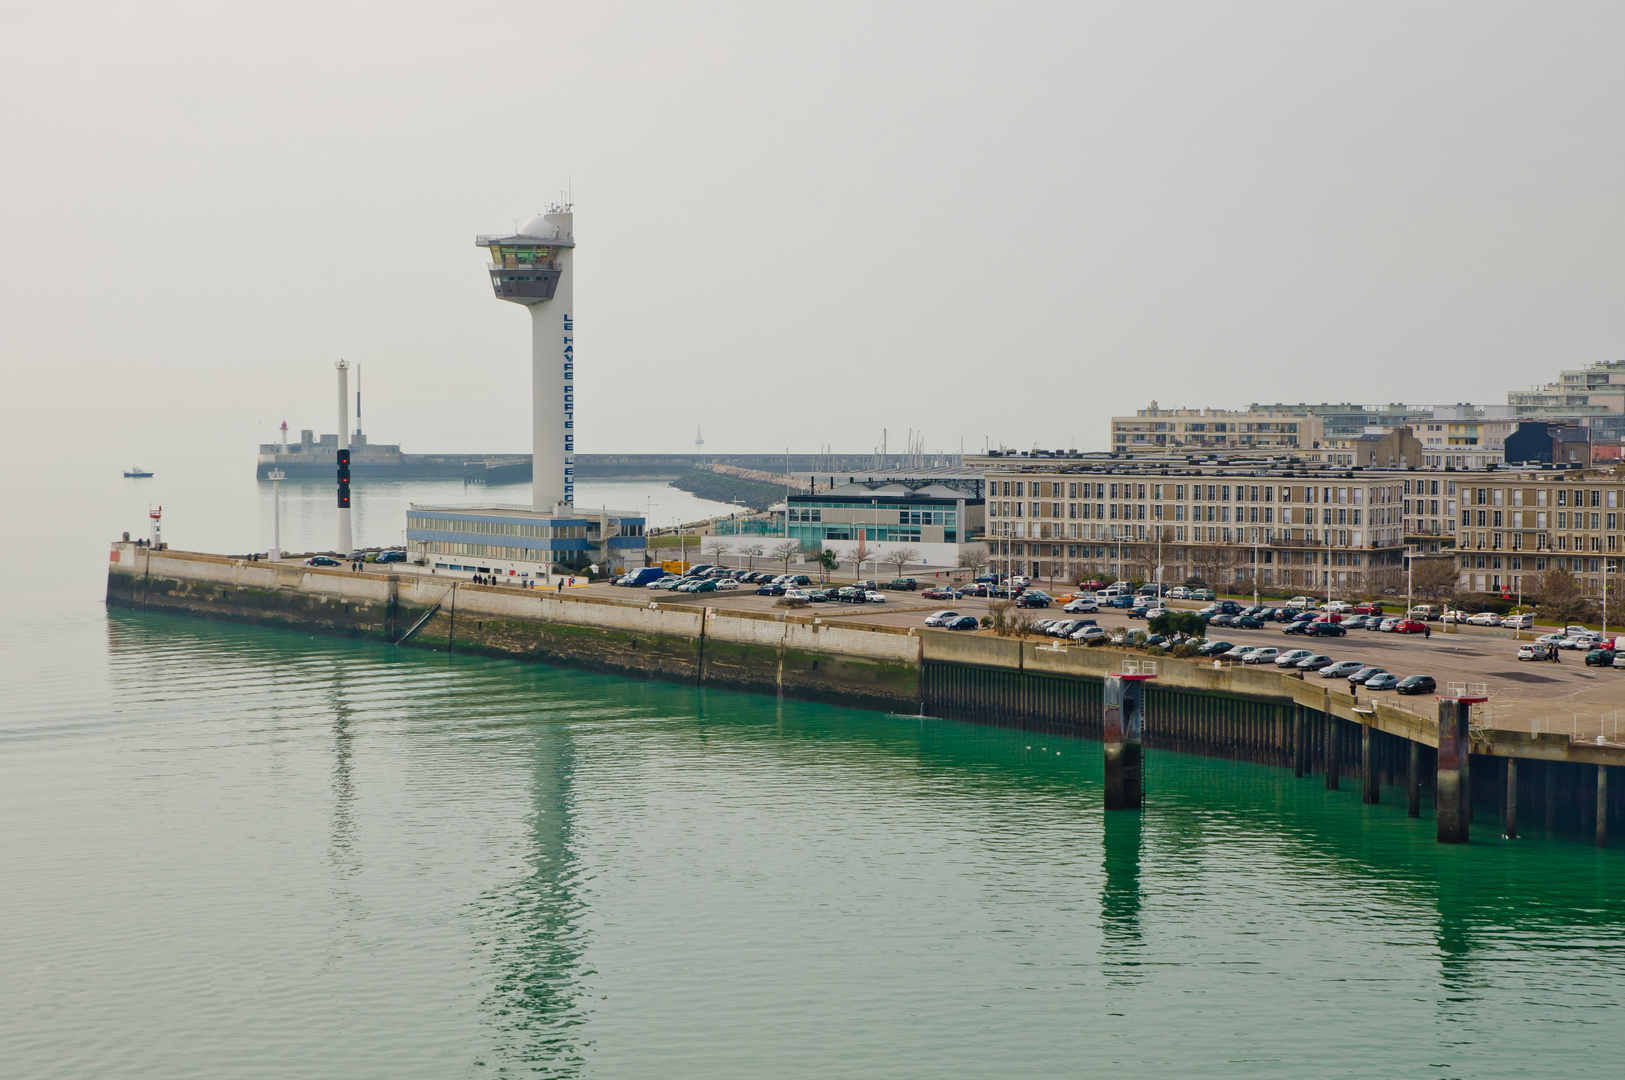 Bienvenue Le Havre!